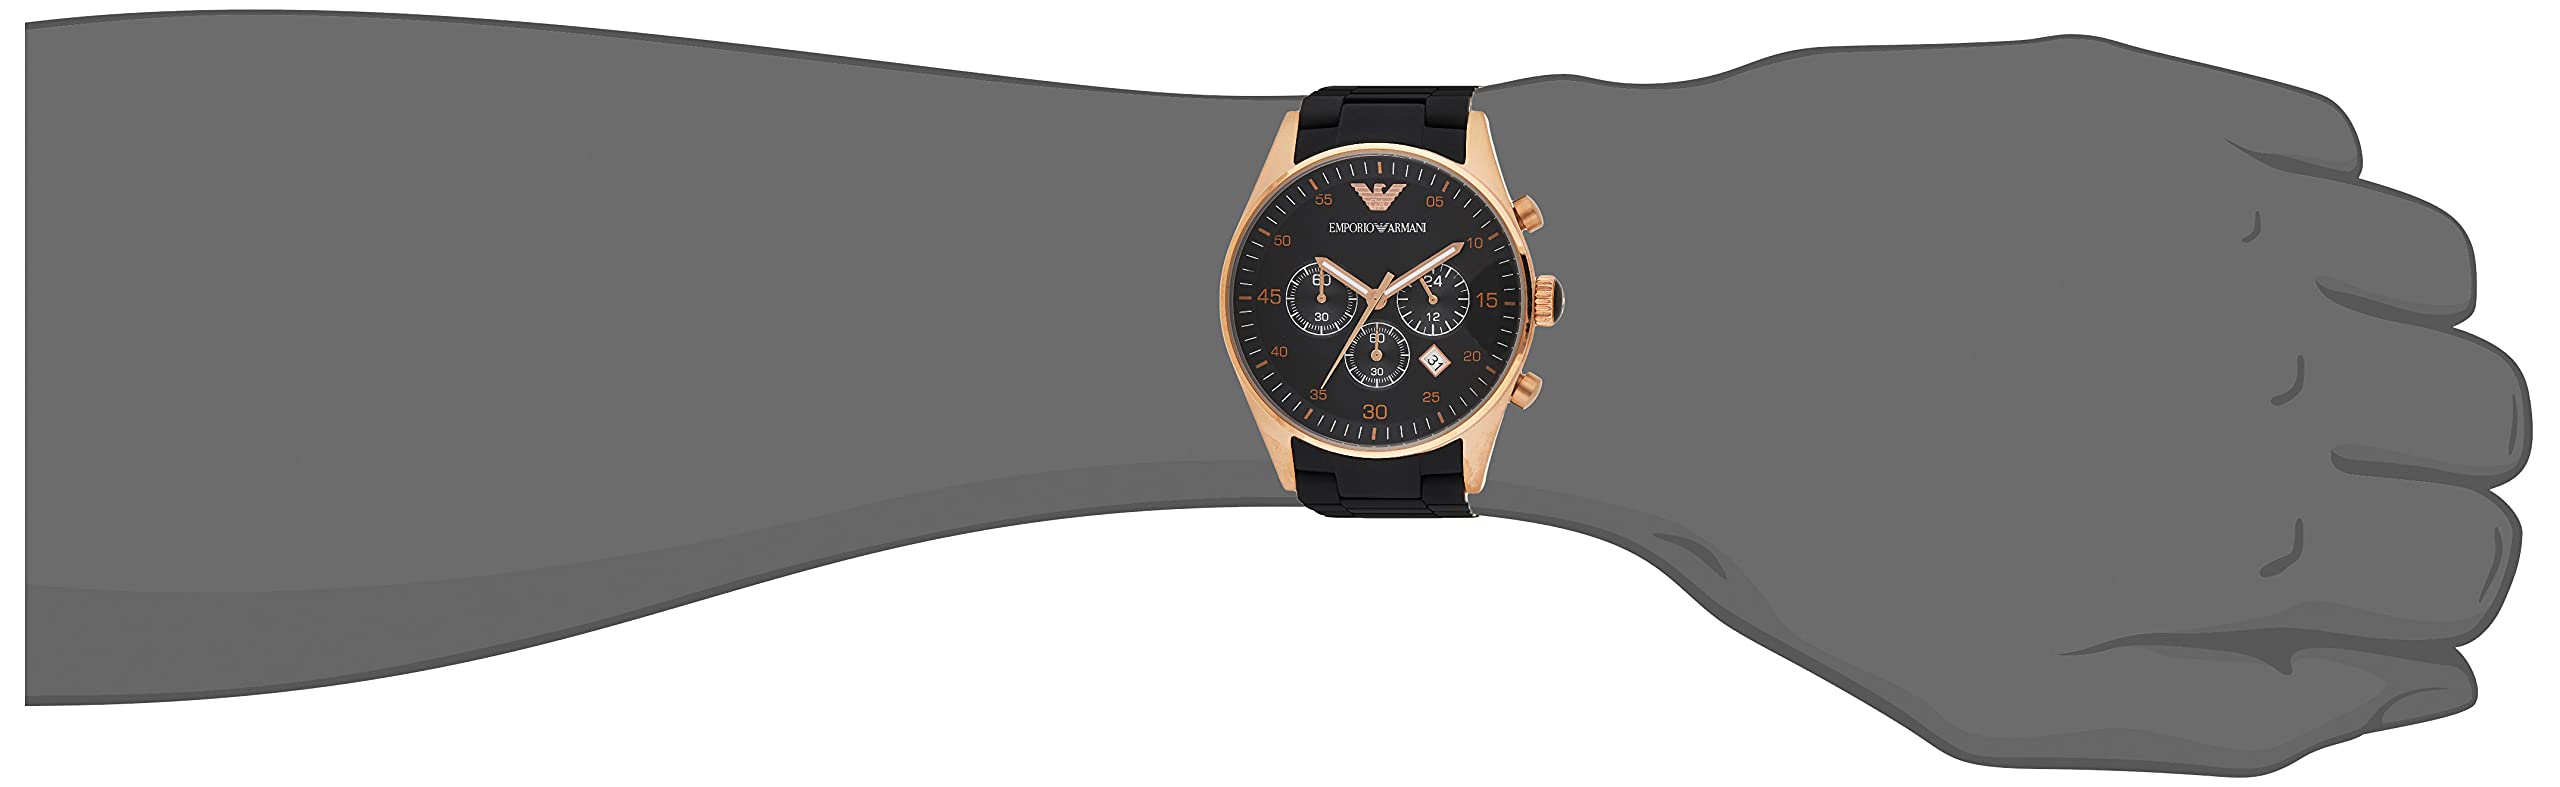 Emporio Armani Men's AR5905 Black Stainless Steel Watch